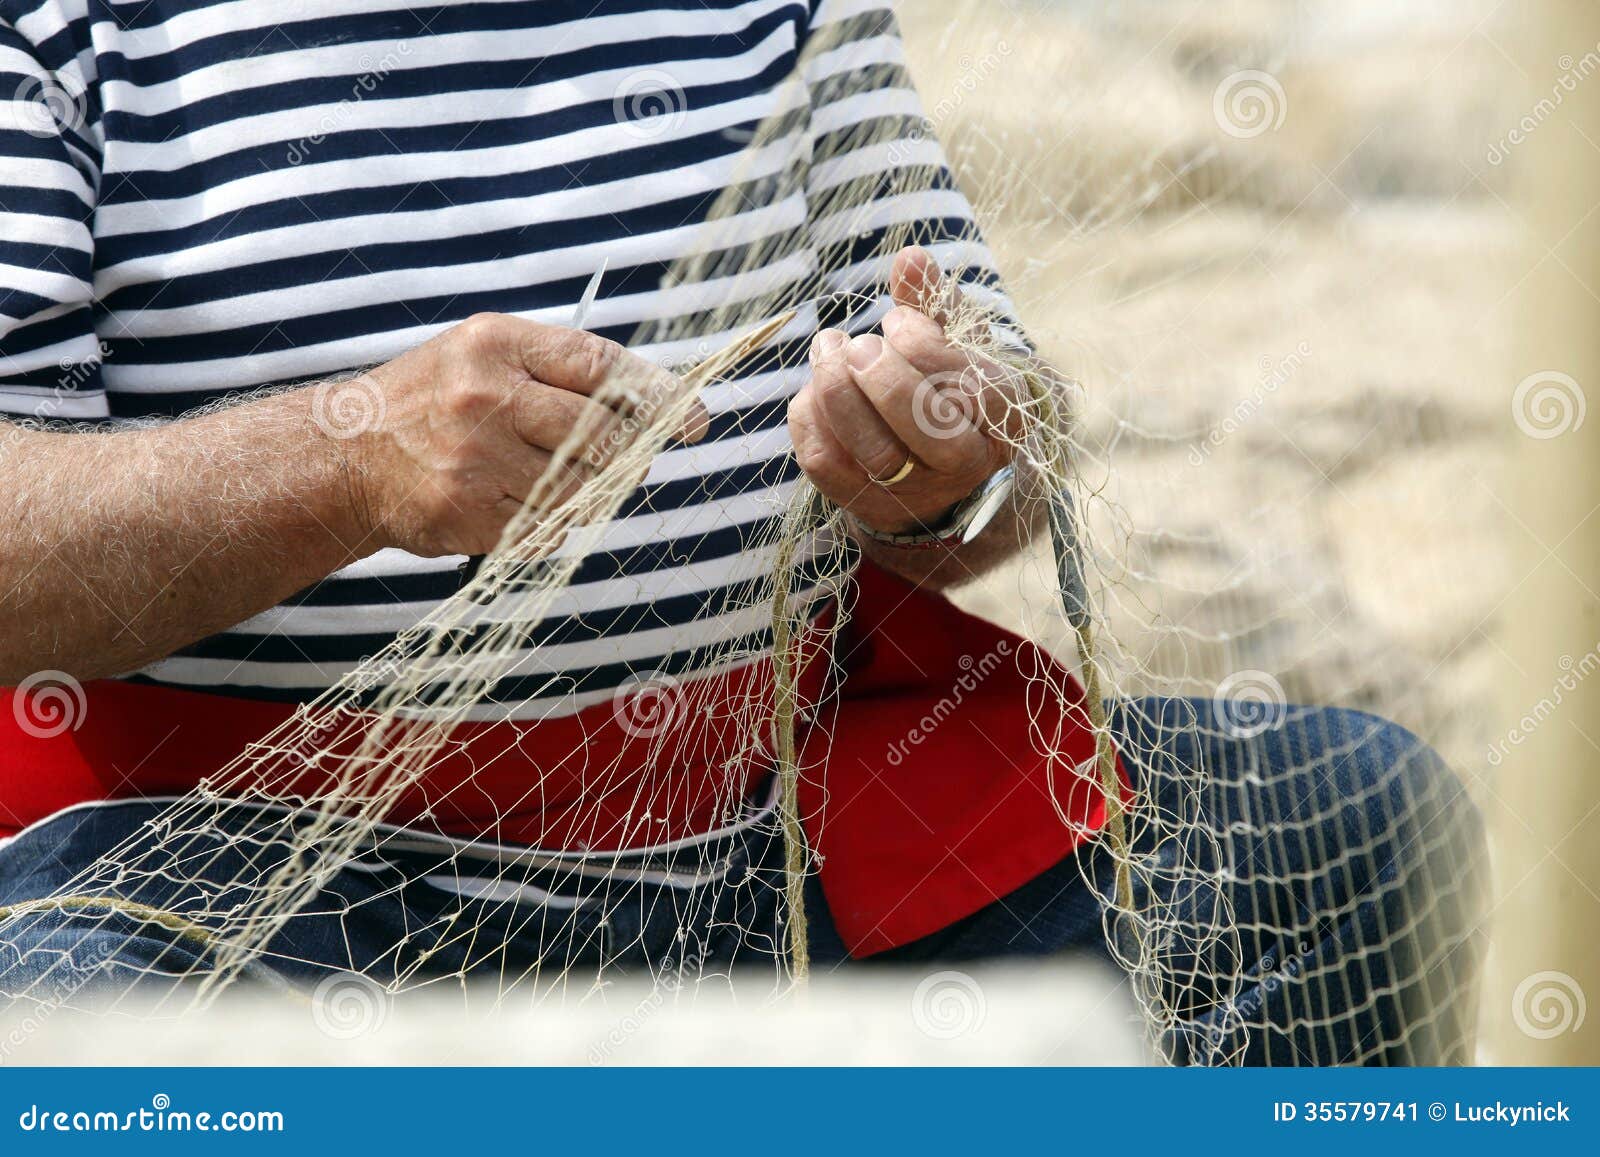 old fisherman mending nets